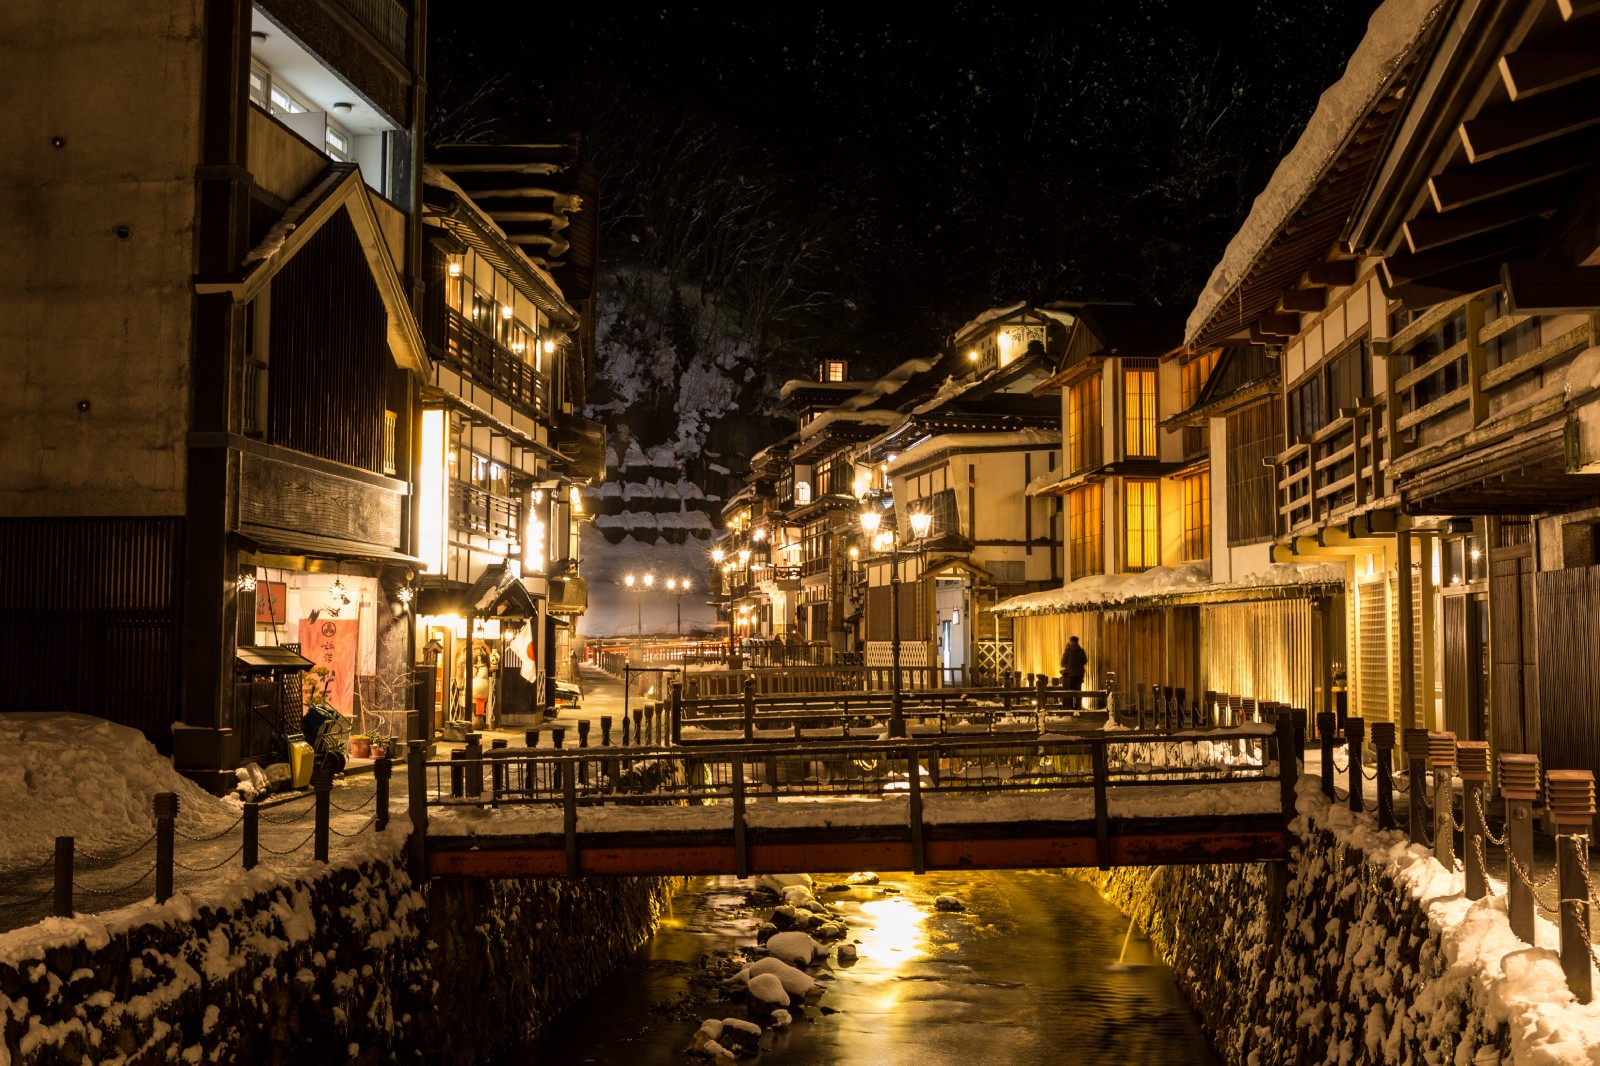 GINZAN Onsen: Nostalgic Hot Spring Town from 19th Century